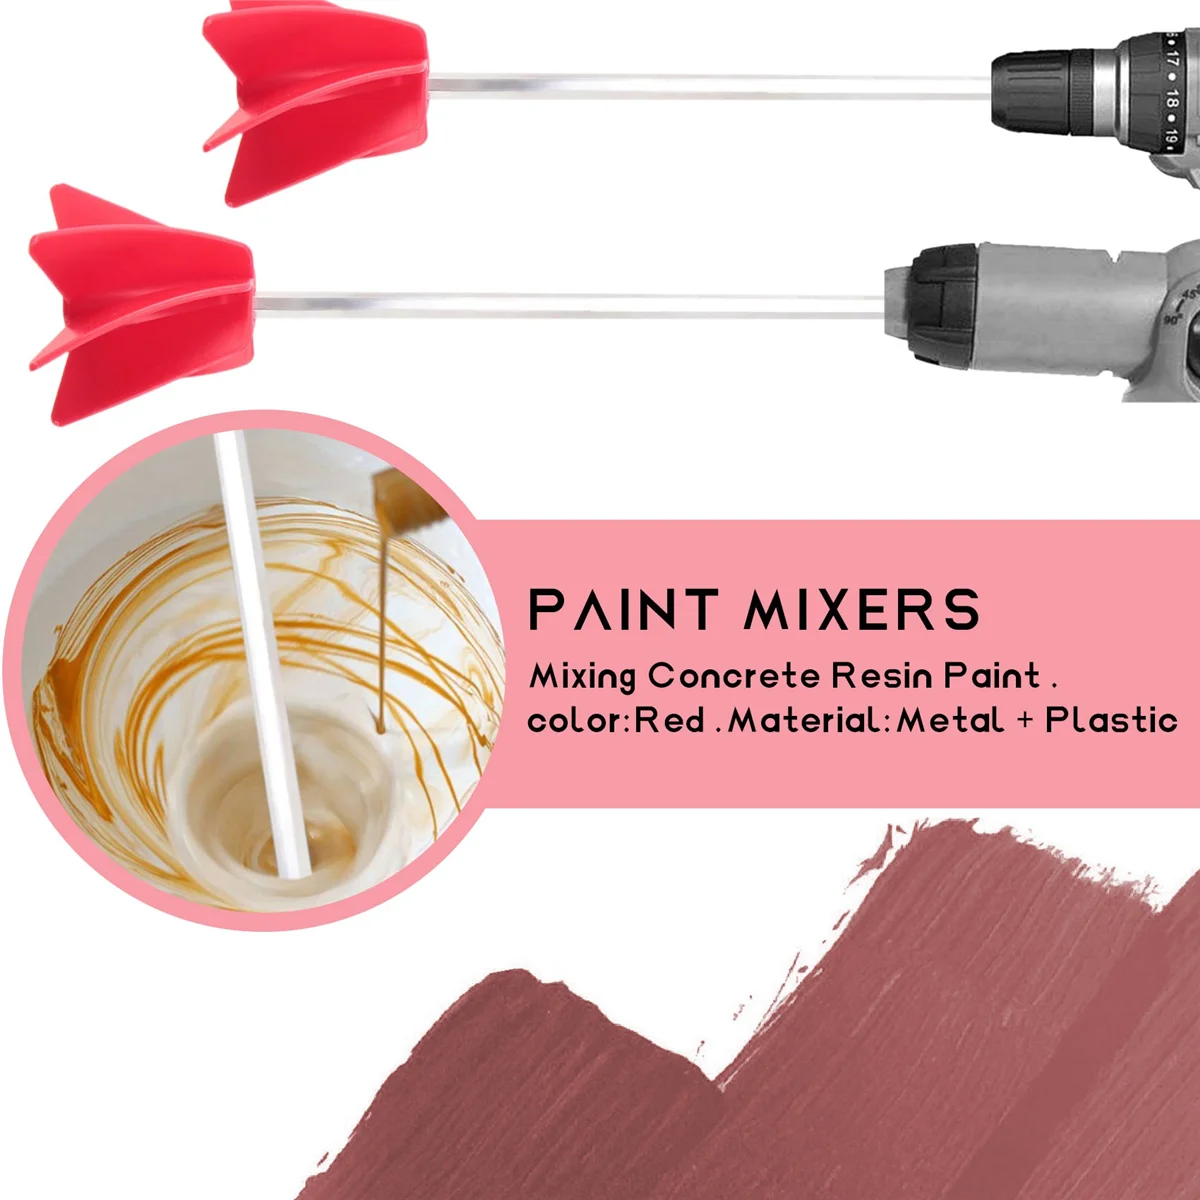 3Pcs Paint Mixer Drill Attachment, Paint Mixer for Drill,Paint Stirrer for Drill, Drill Paint Mixer for Most Drills